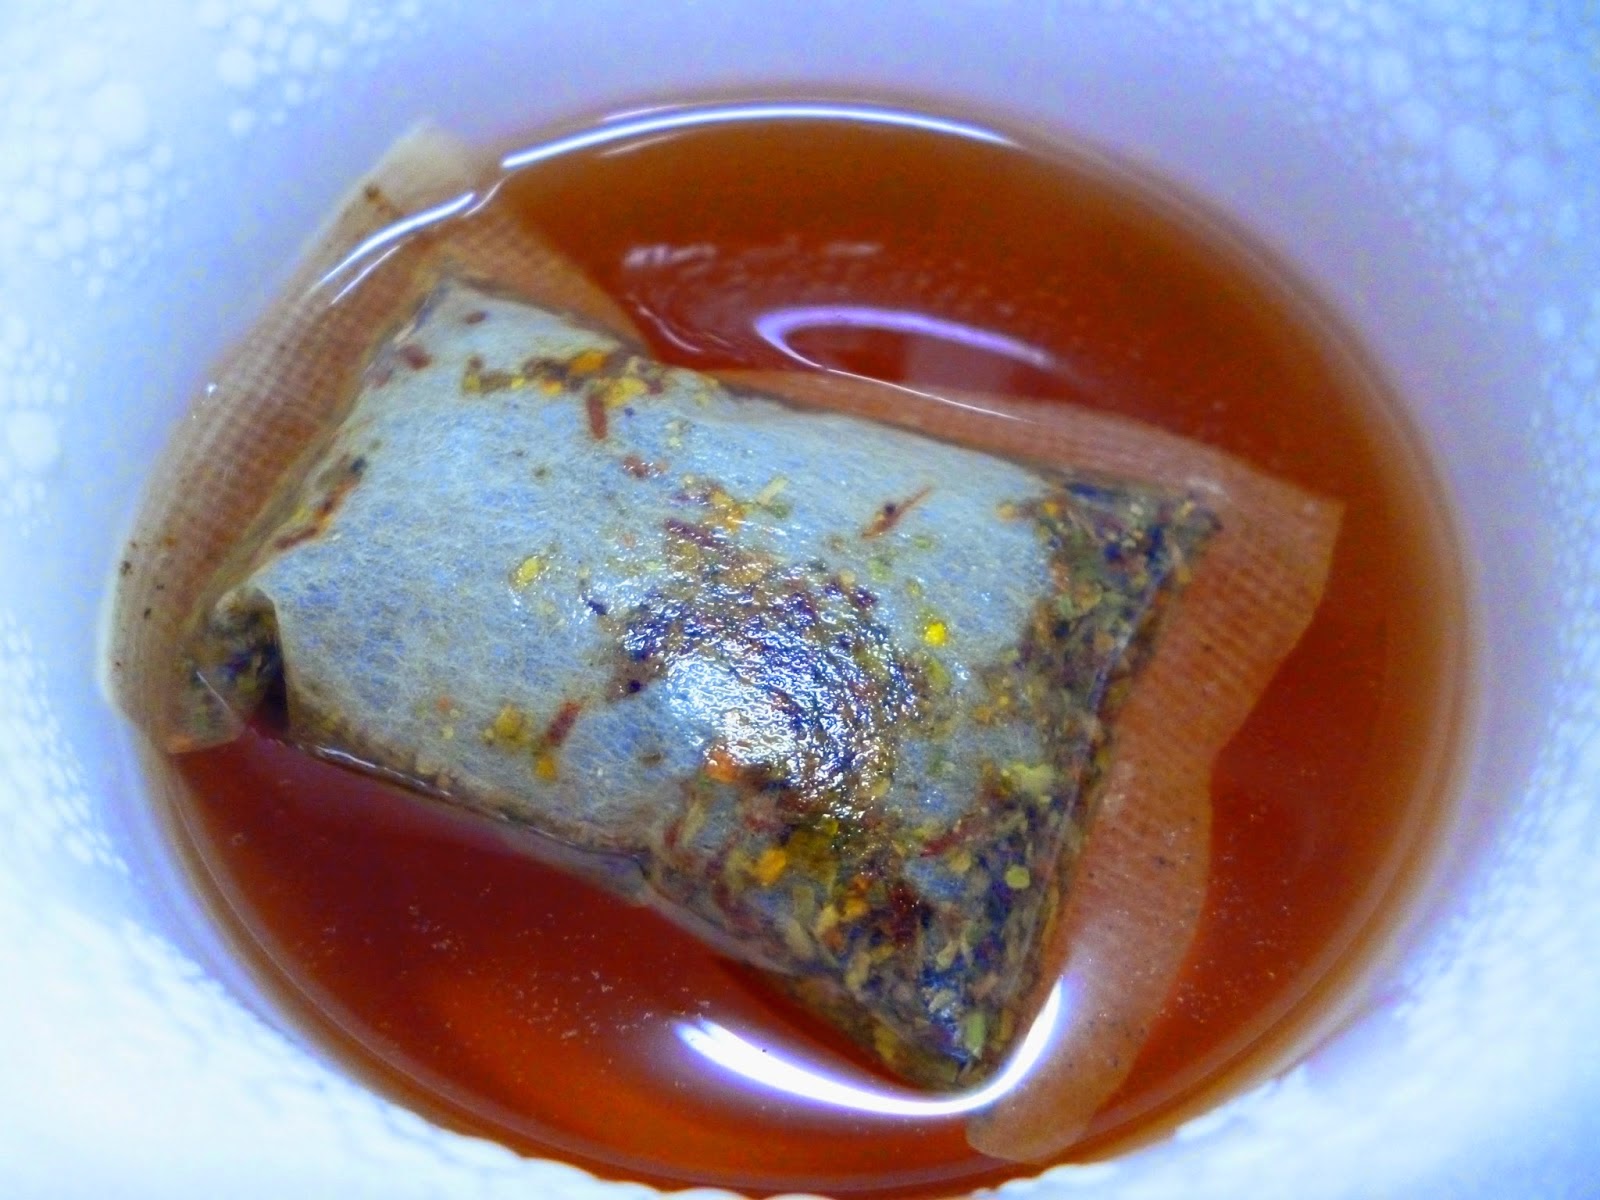 TruDtox - Botanical Tea Blend Review